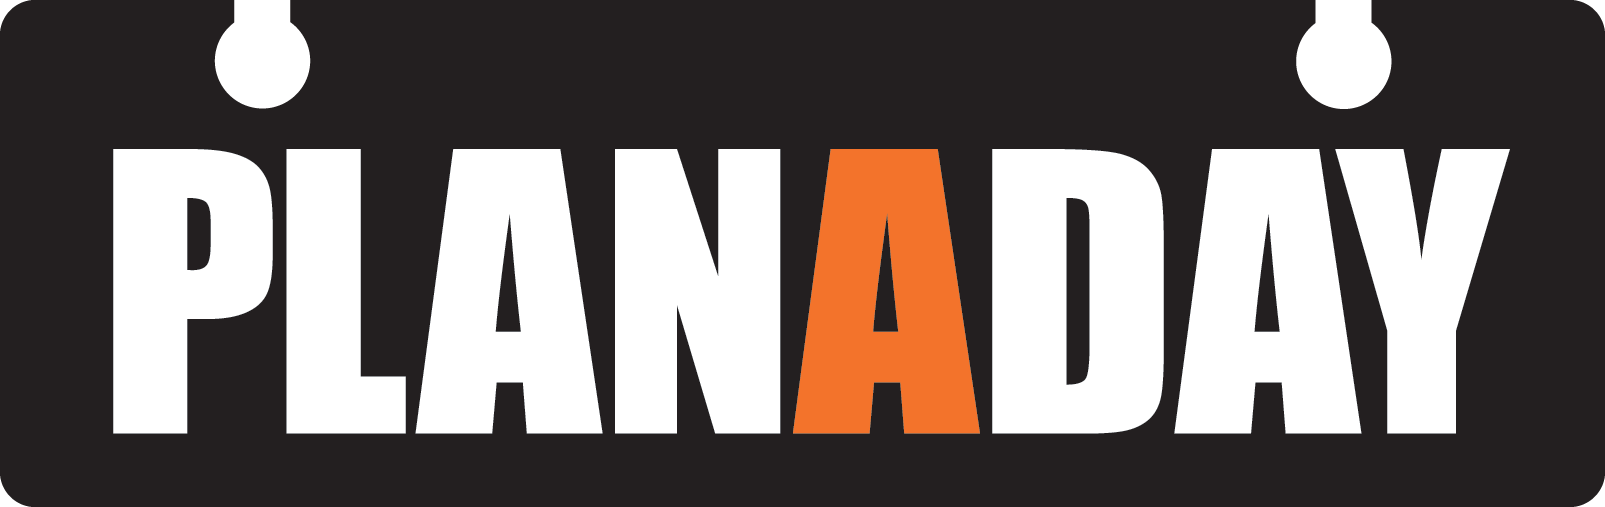 Planaday logo